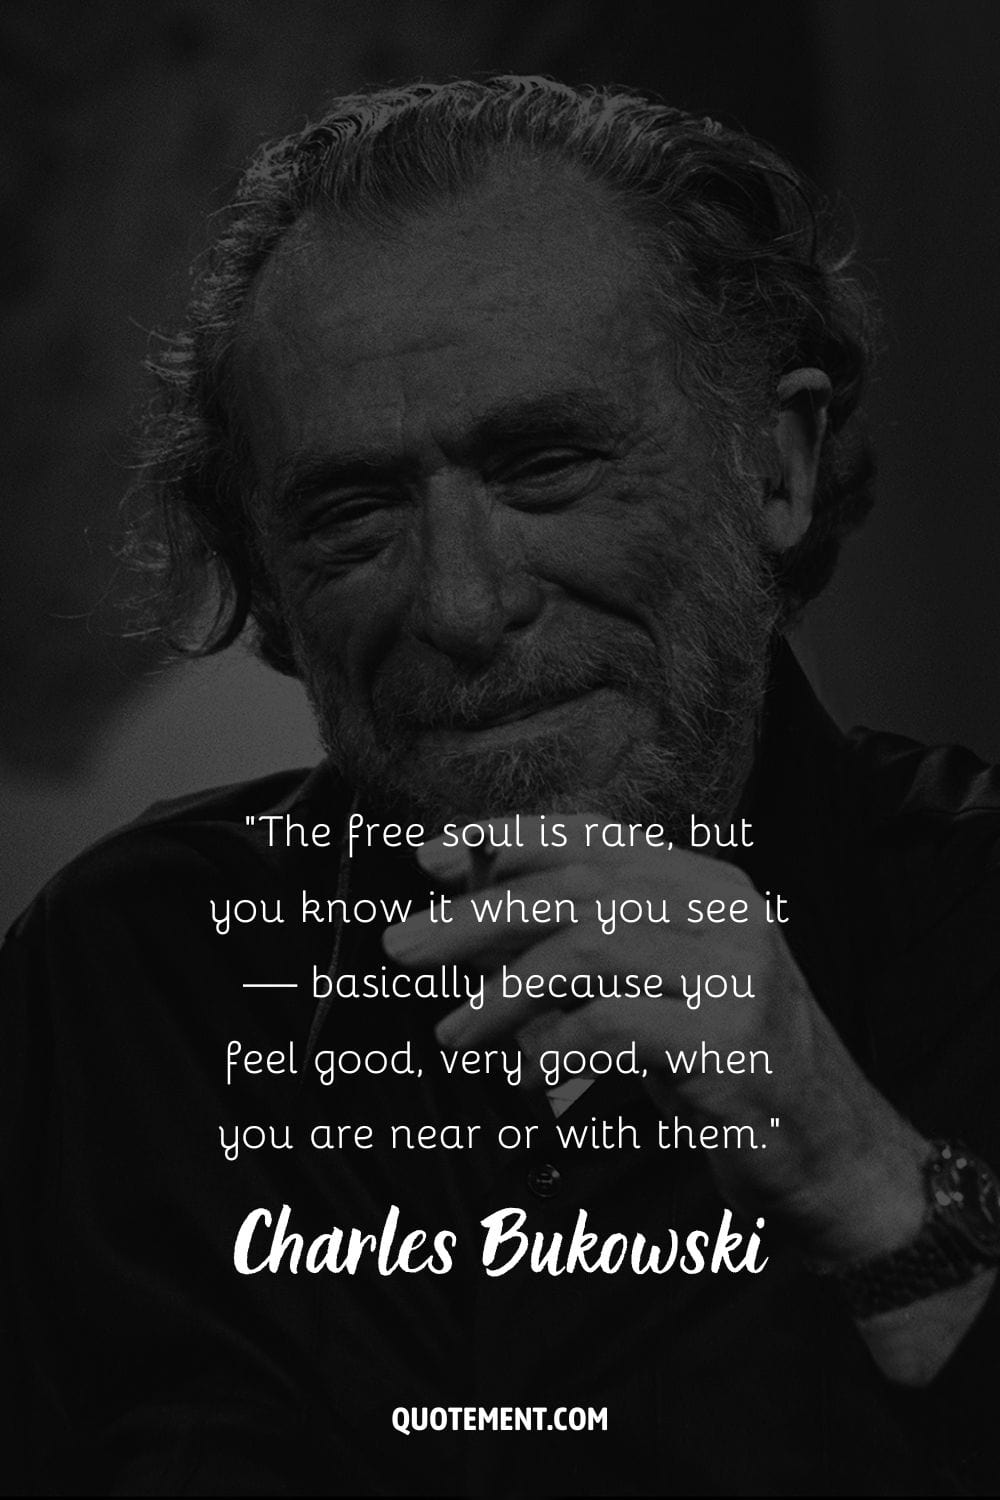 portrait of Bukowski holding a cigarette representing the greatest Charles Bukowski quote